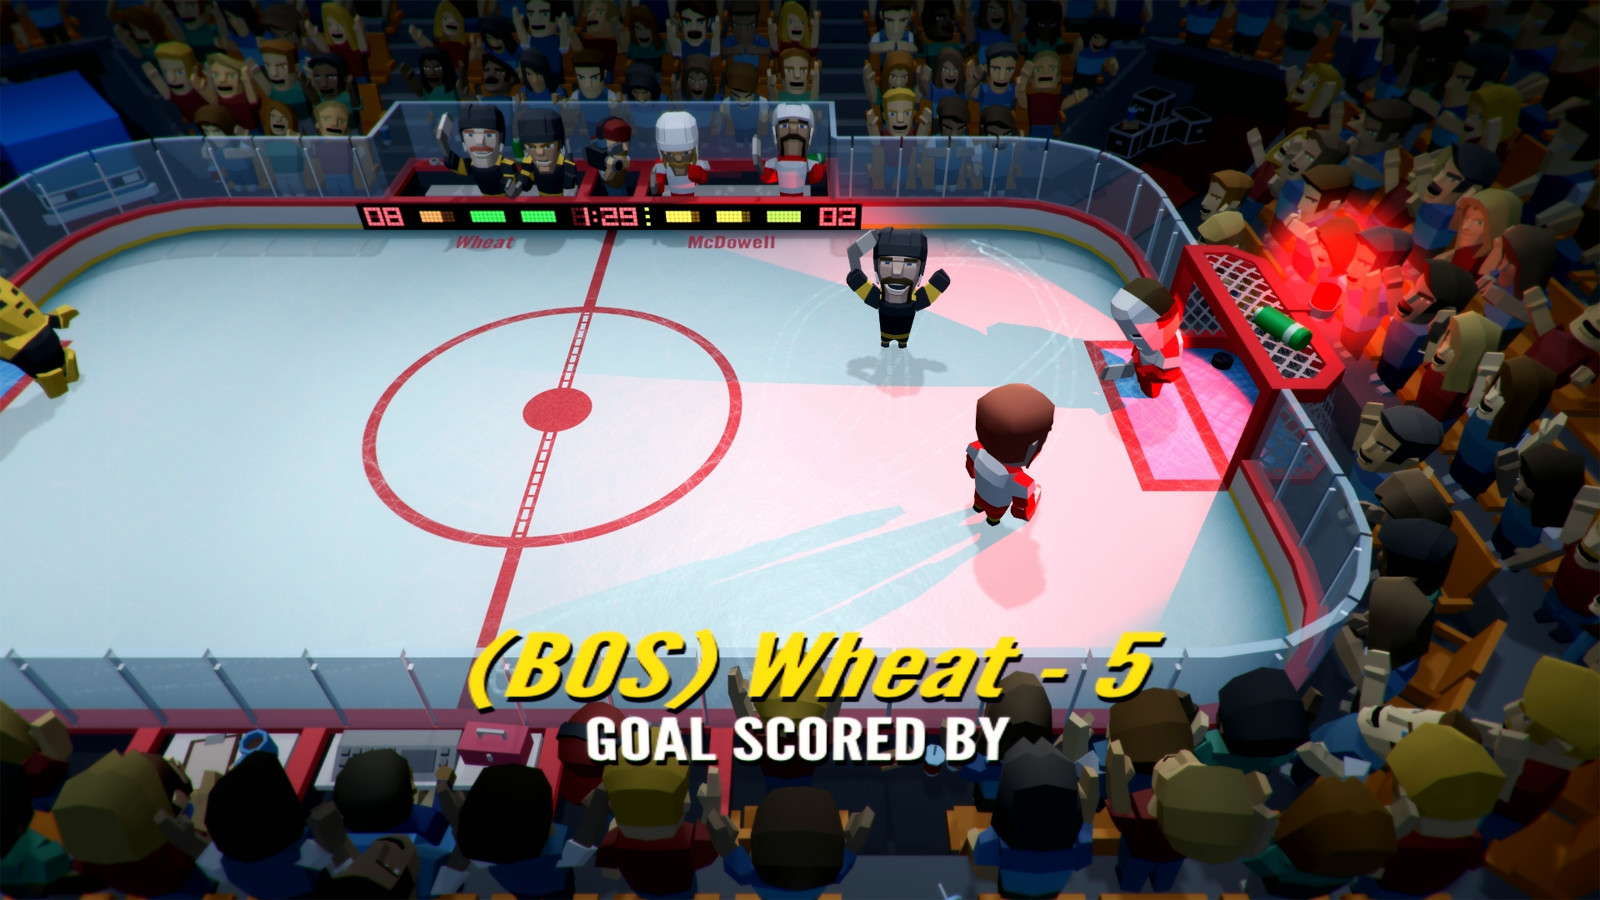 Mini Hockey Champ! screenshot